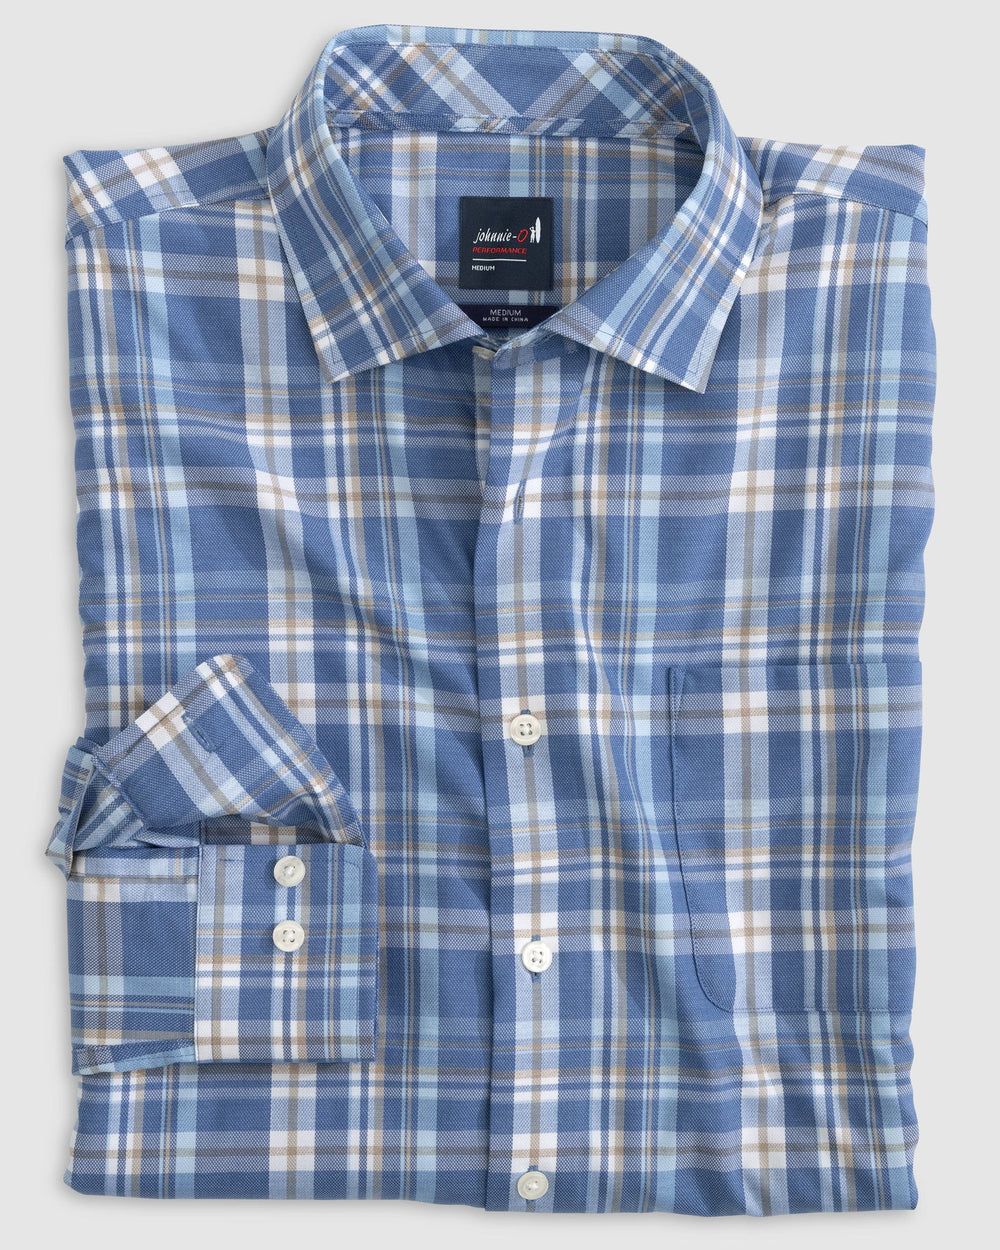 Johnnie-O Lassen Performance Button Up Shirt